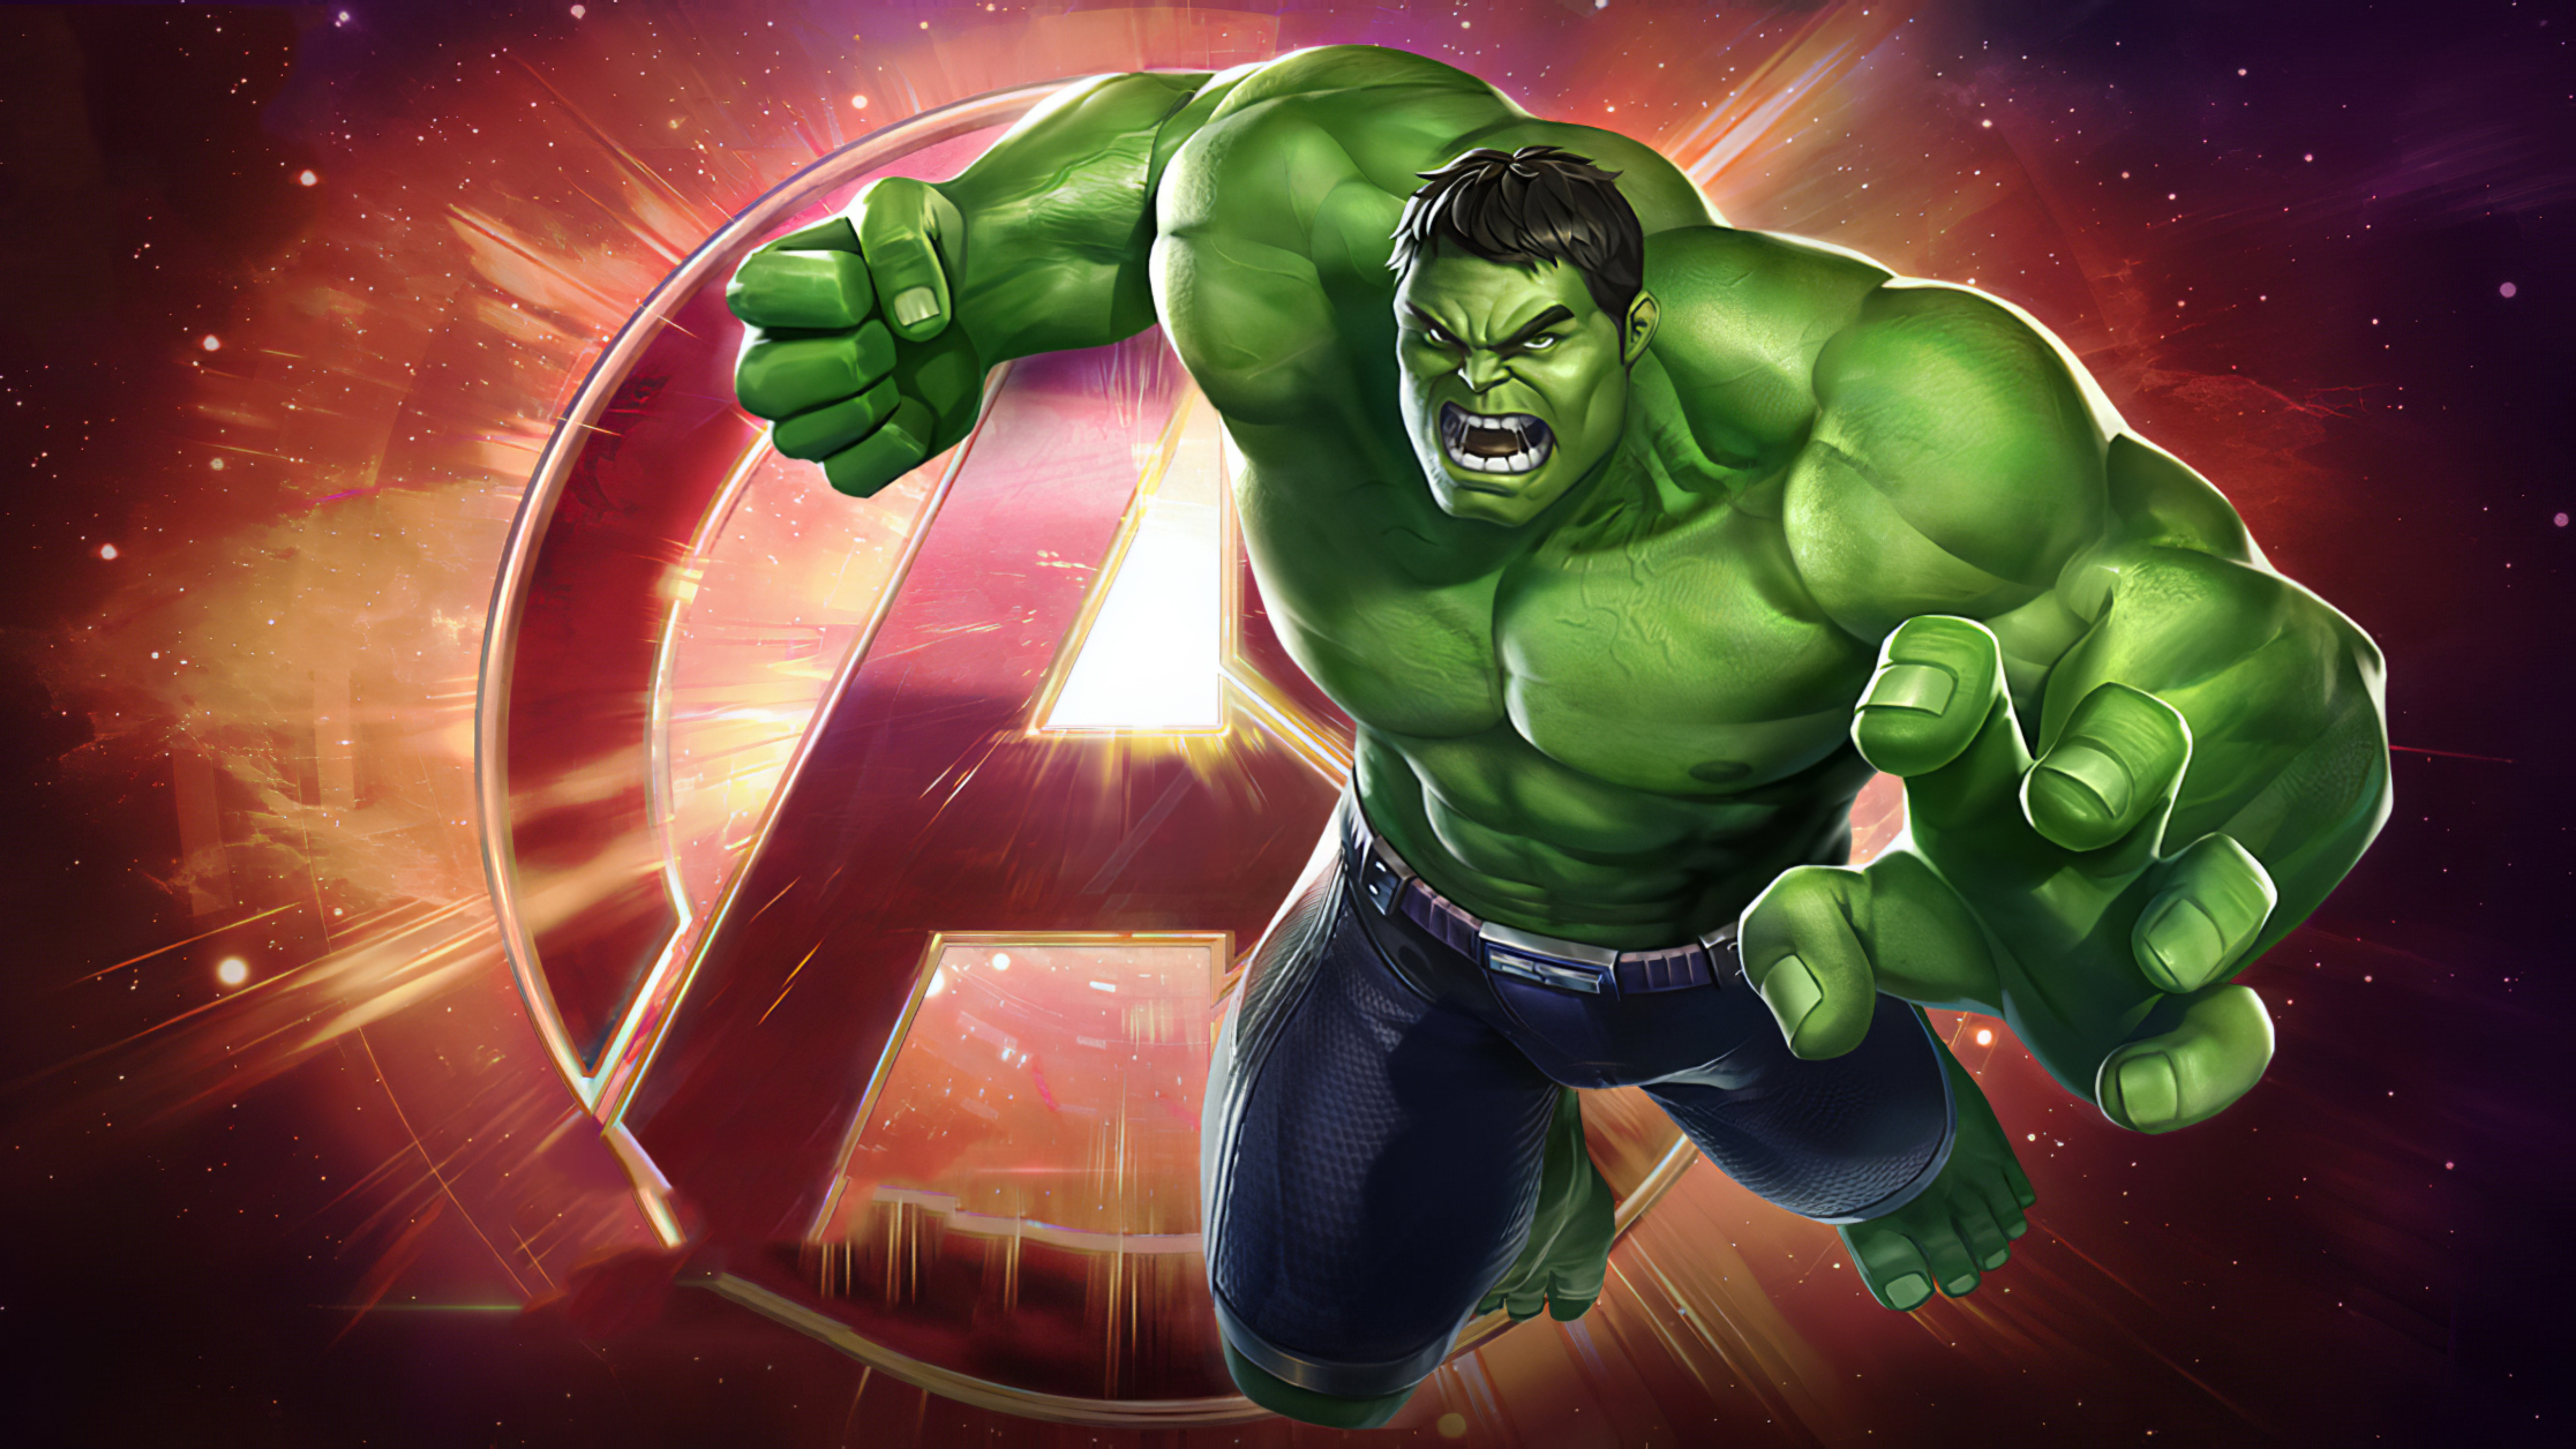 7680x4320 Avengers Hulk Game 8K Wallpaper, HD Games 4K Wallpapers